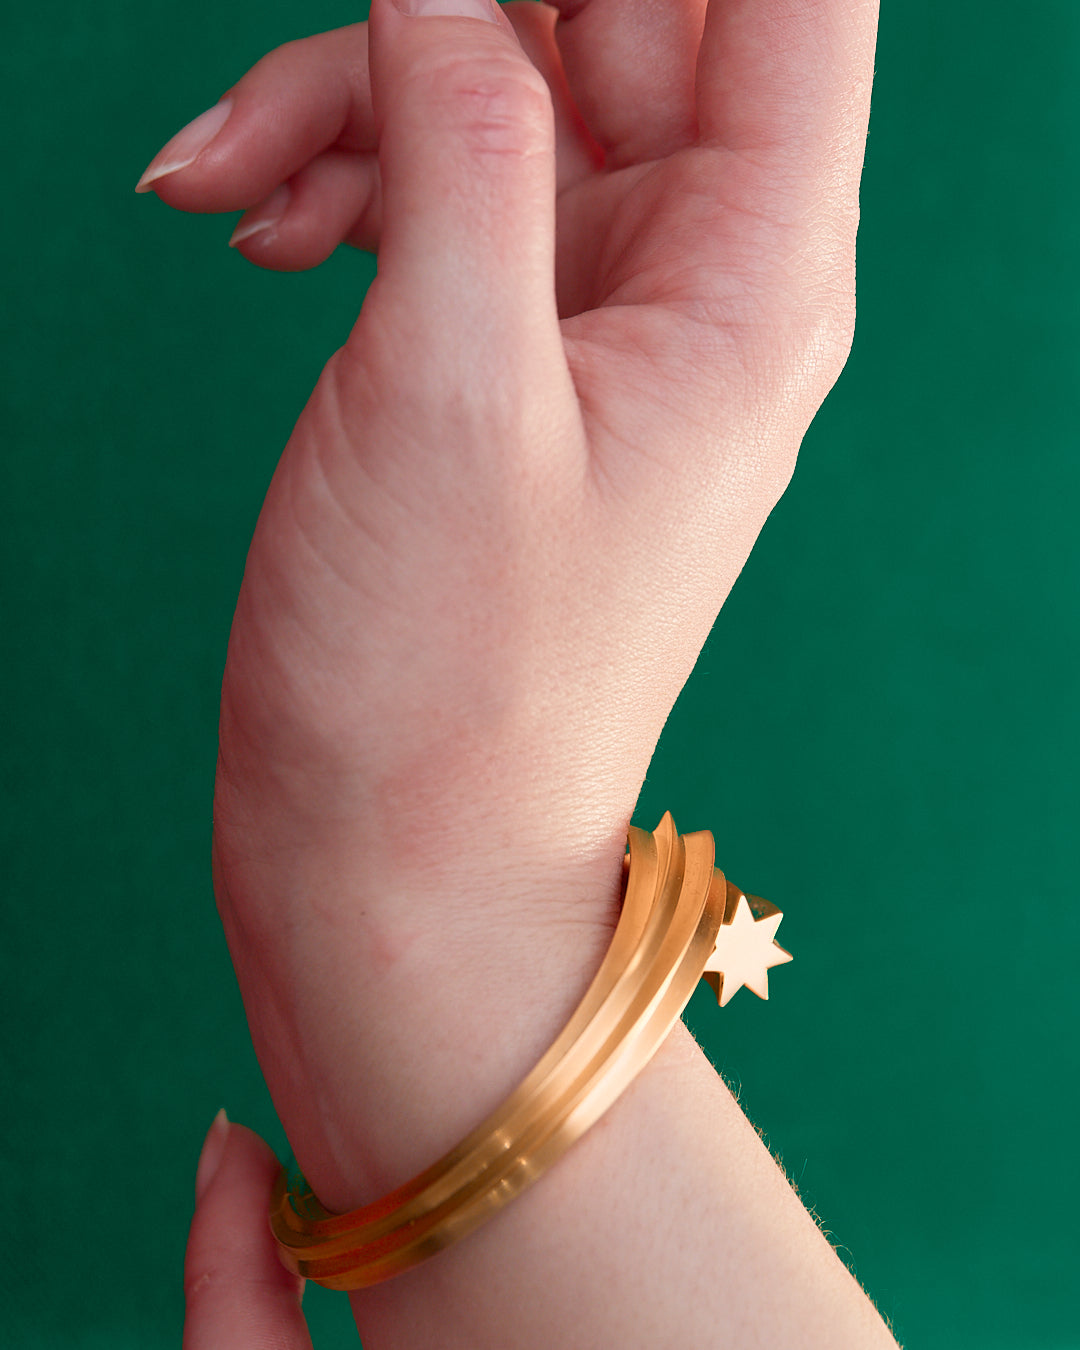 Goldstar twin star motif shooting star bangle in 18 karat yellow gold by Solange Azagury-Partridge on wrist